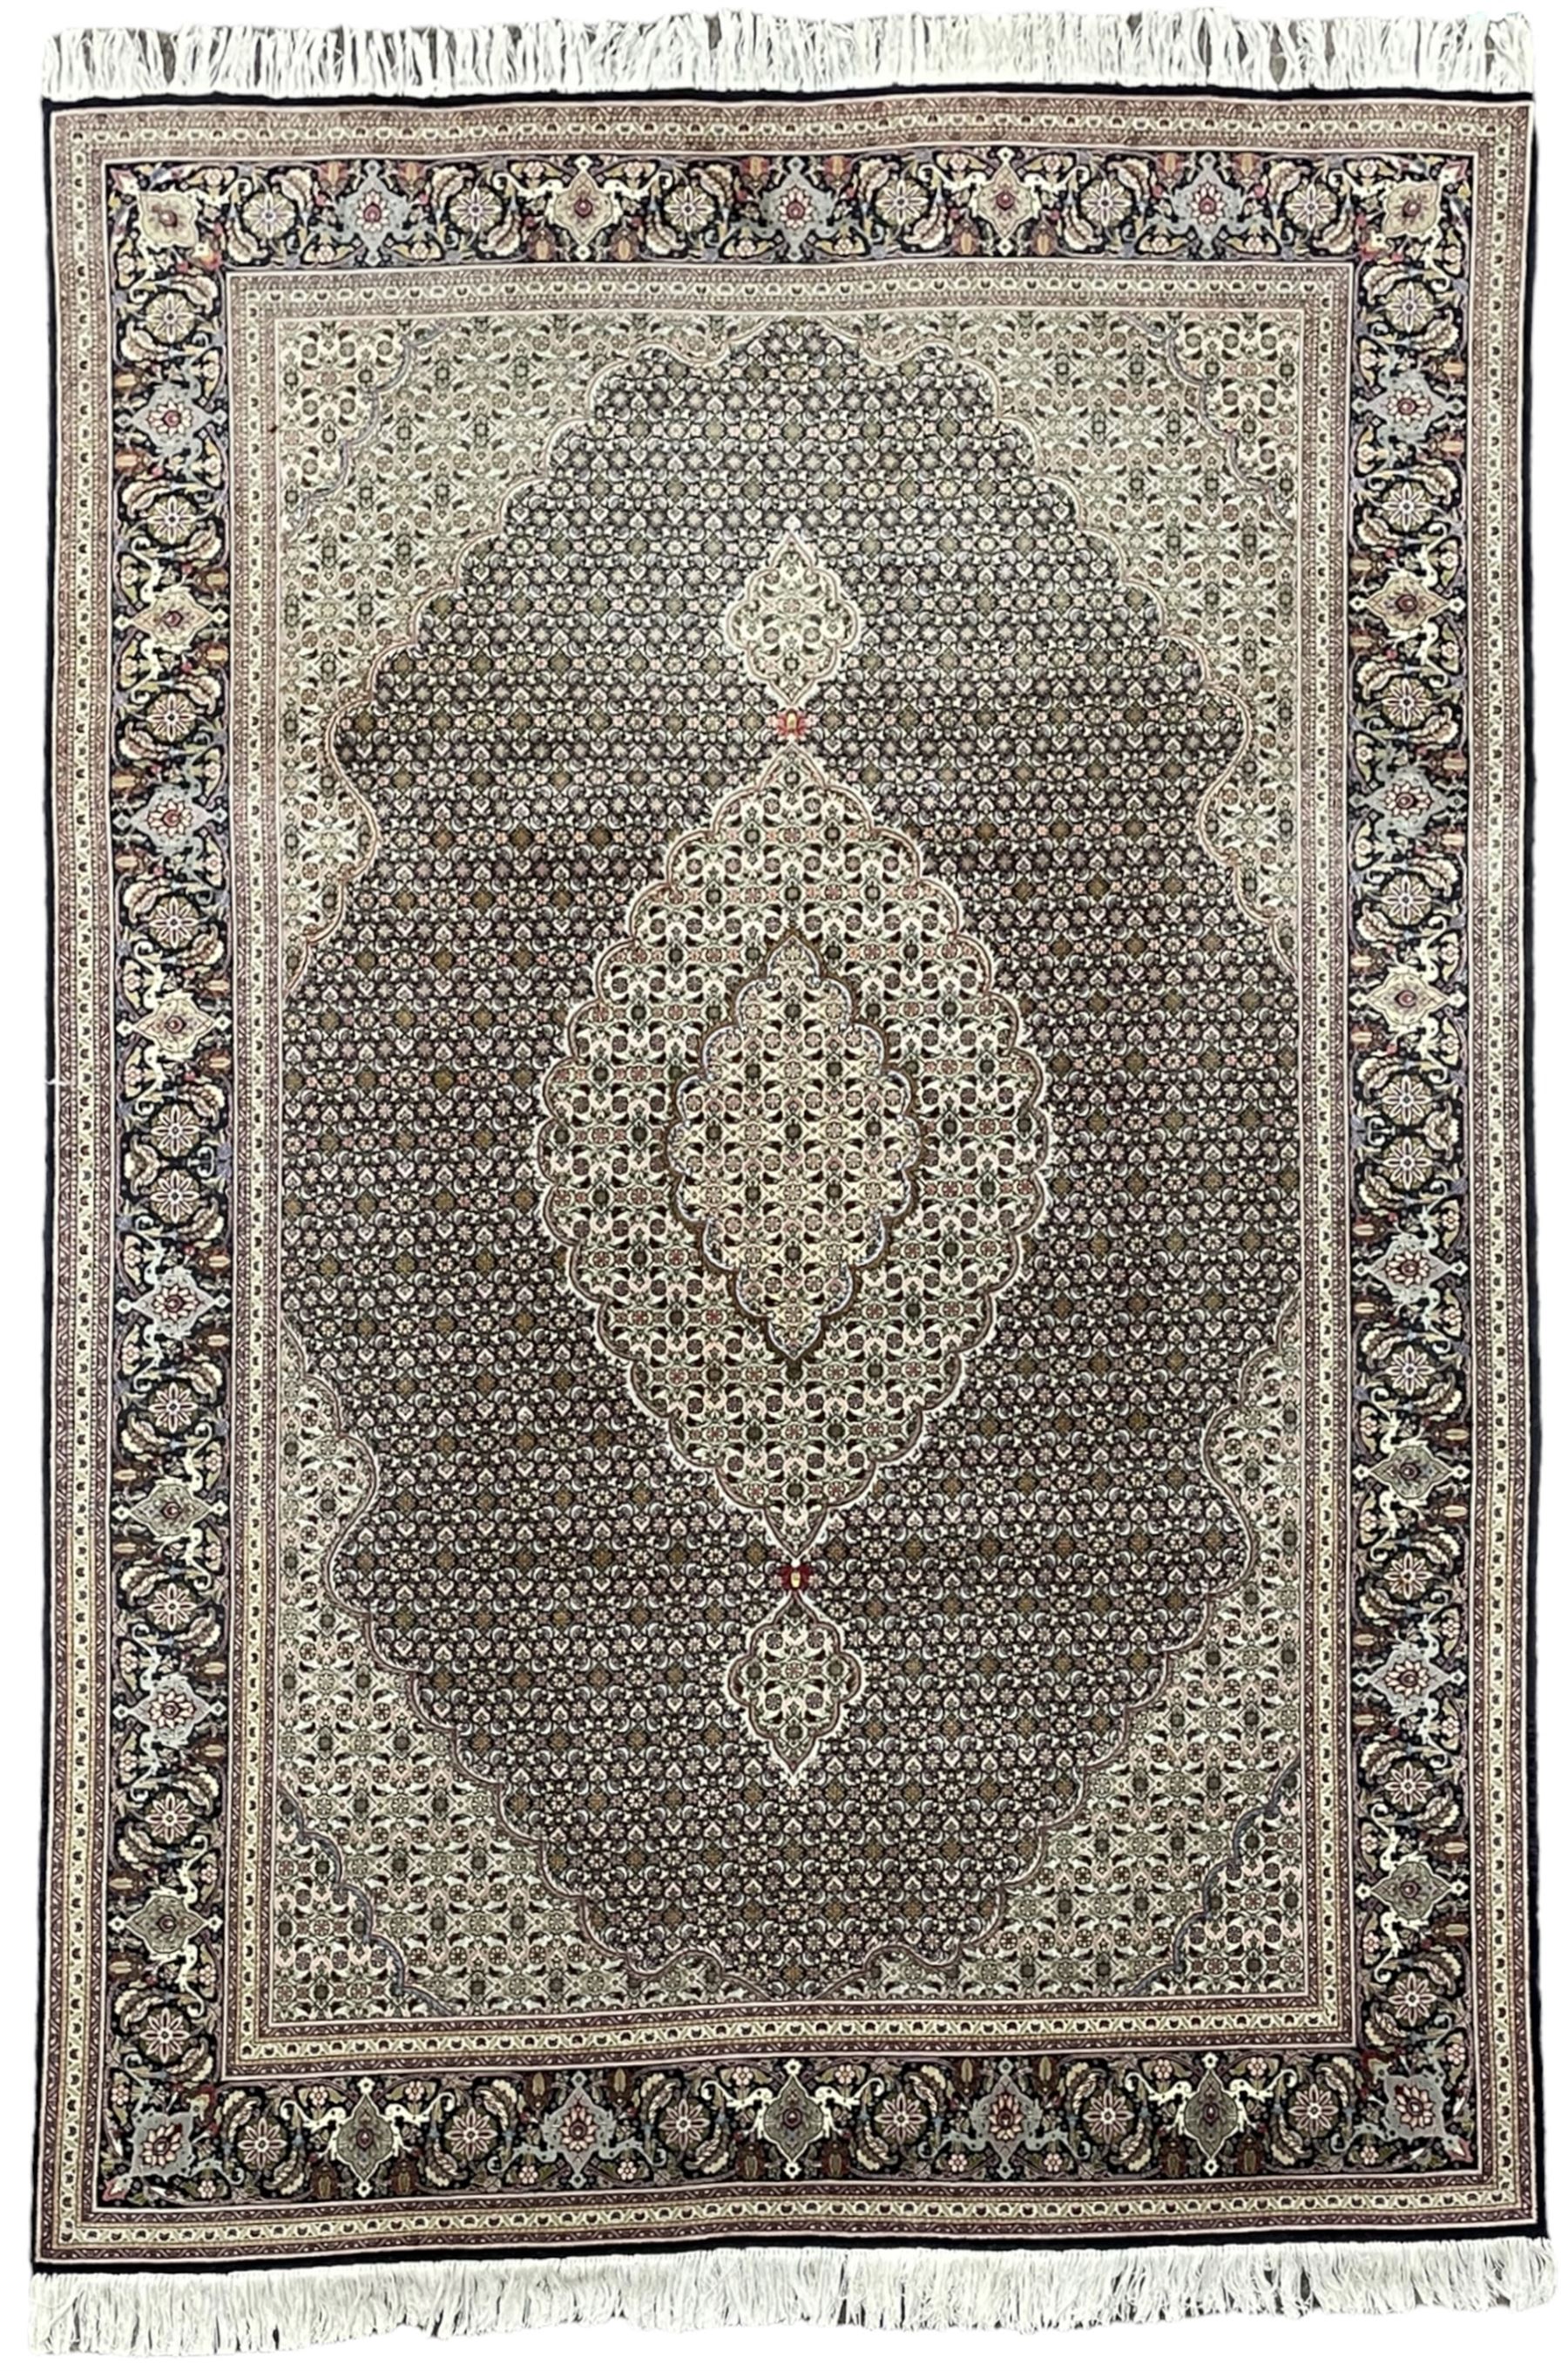 Fine Persian Tabriz rug